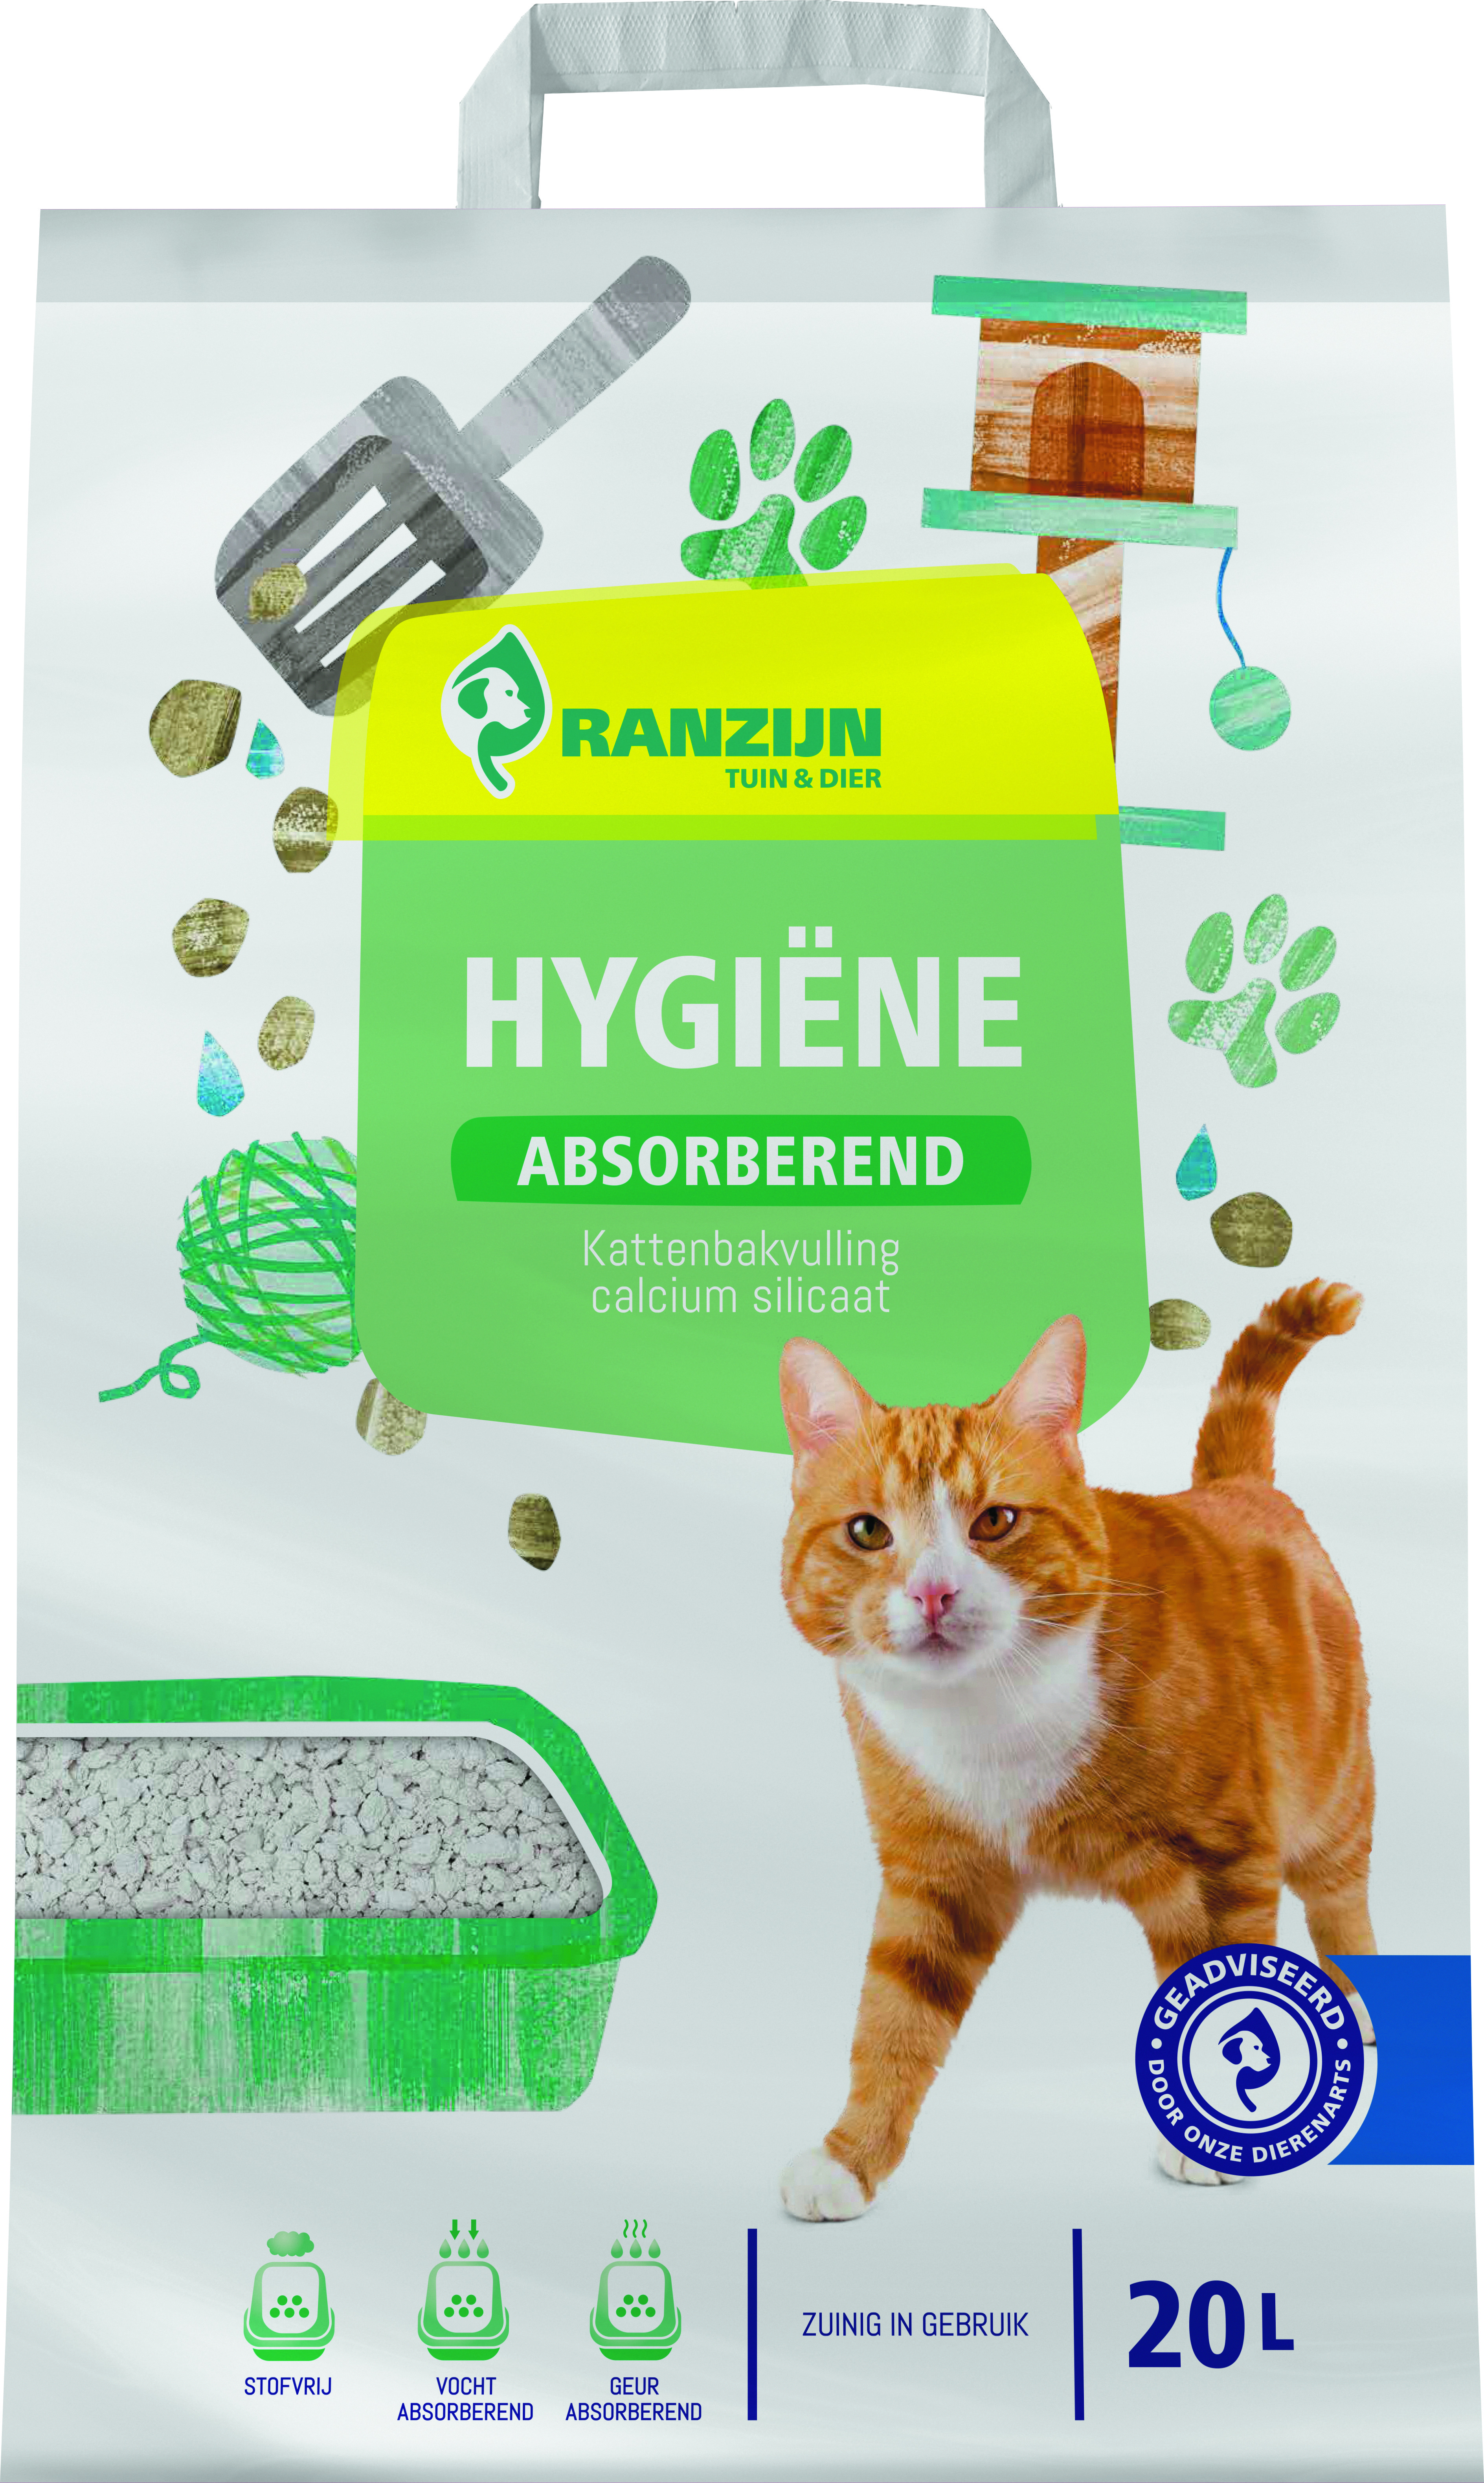 Pikken Pilfer Beschrijving Ranzijn Kattenbakvuling Absorberend 20 Ltr | Ranzijn tuin & dier